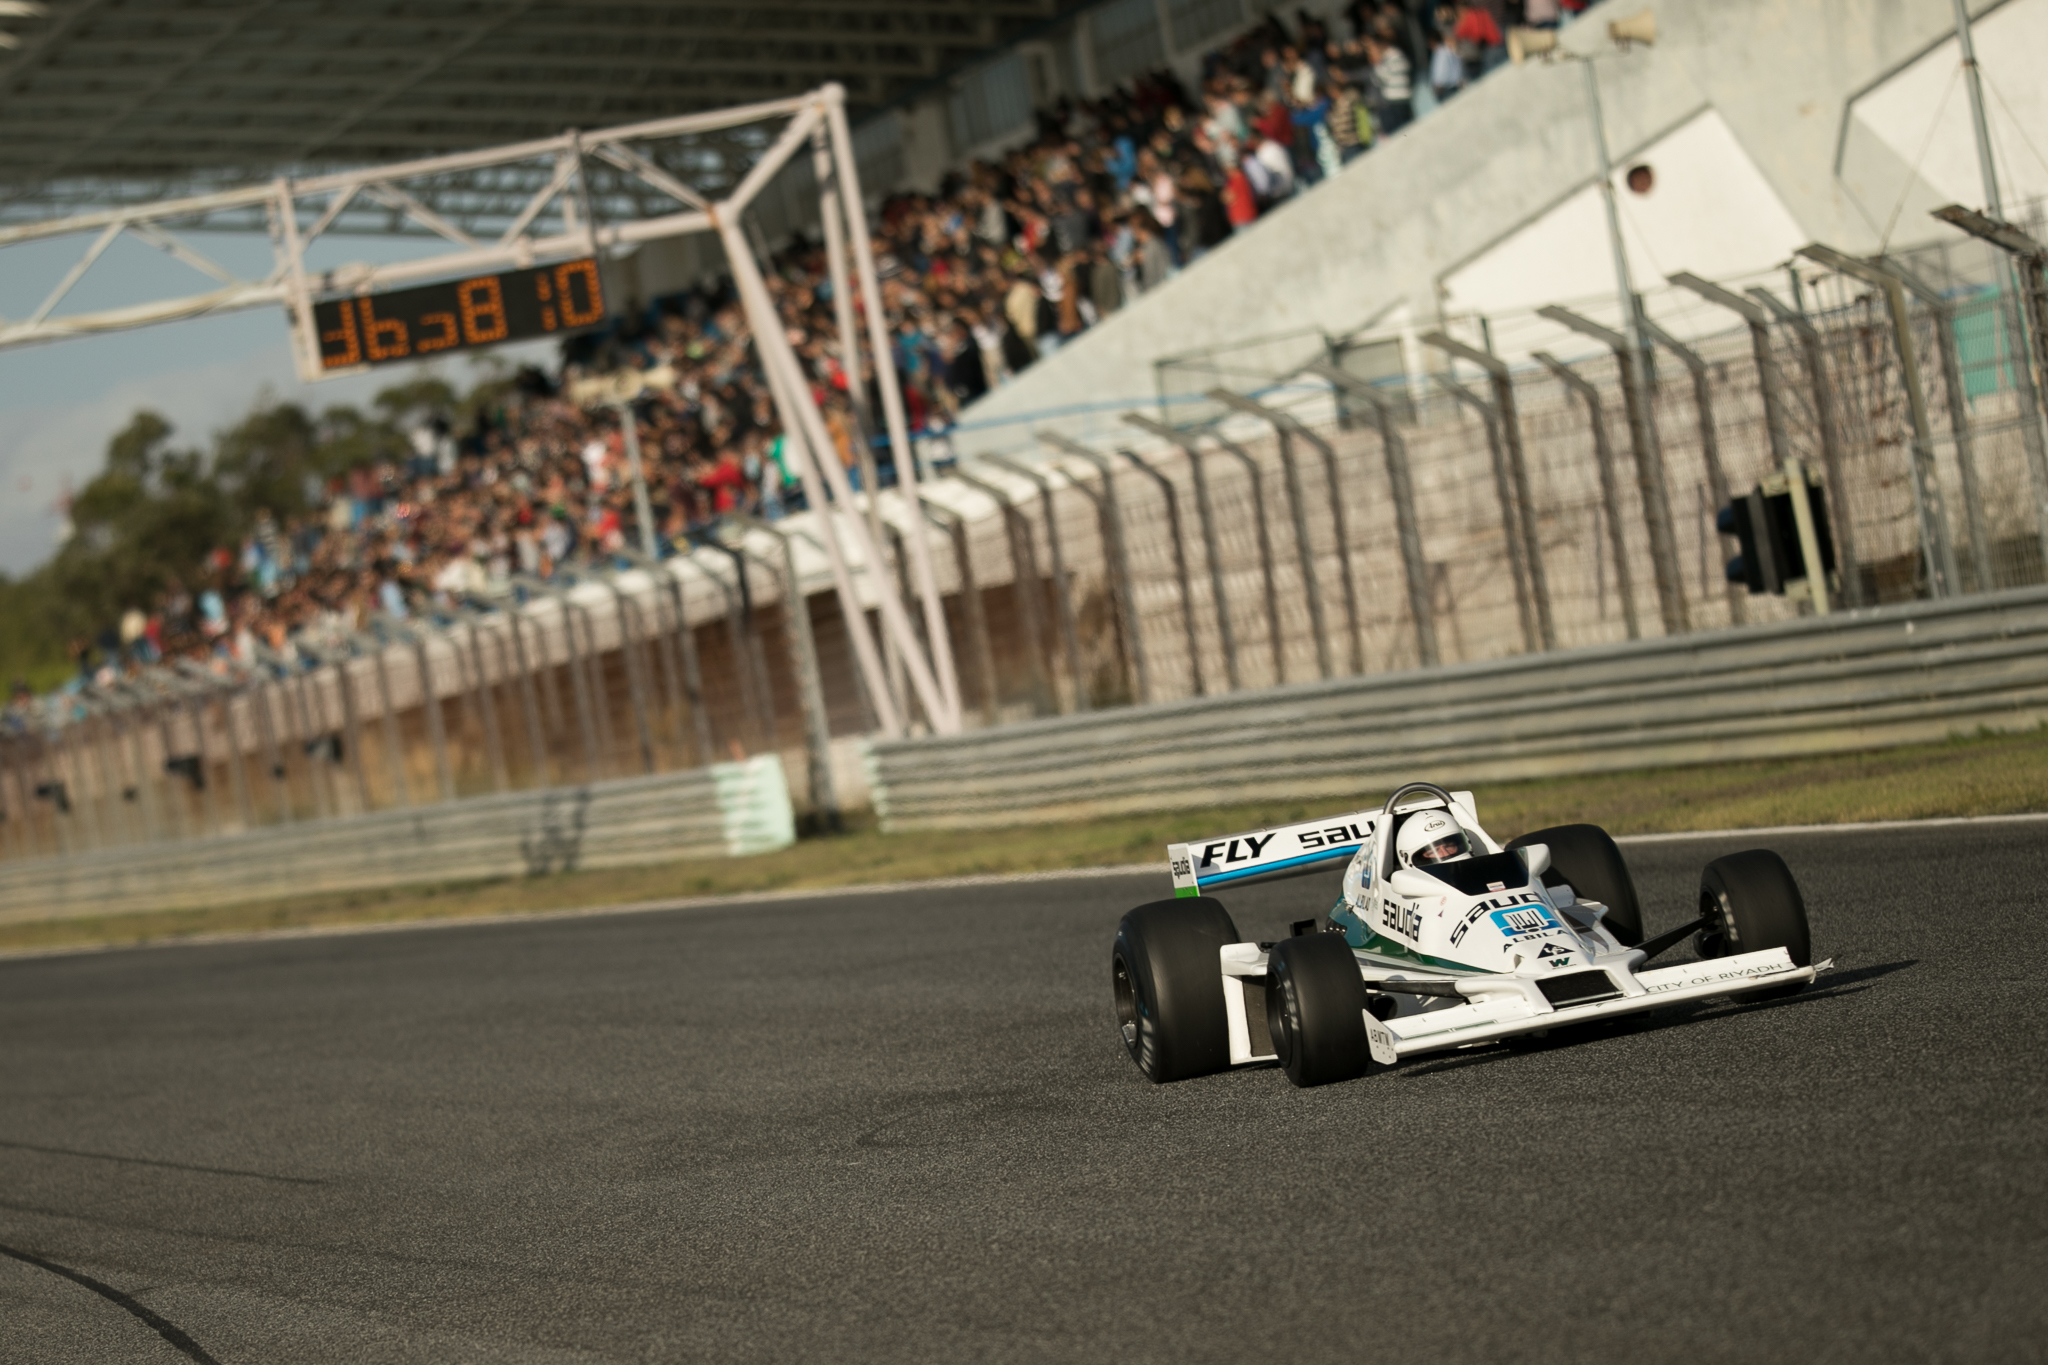 Circuito Estoril - Formula 1 motorsport race track on the